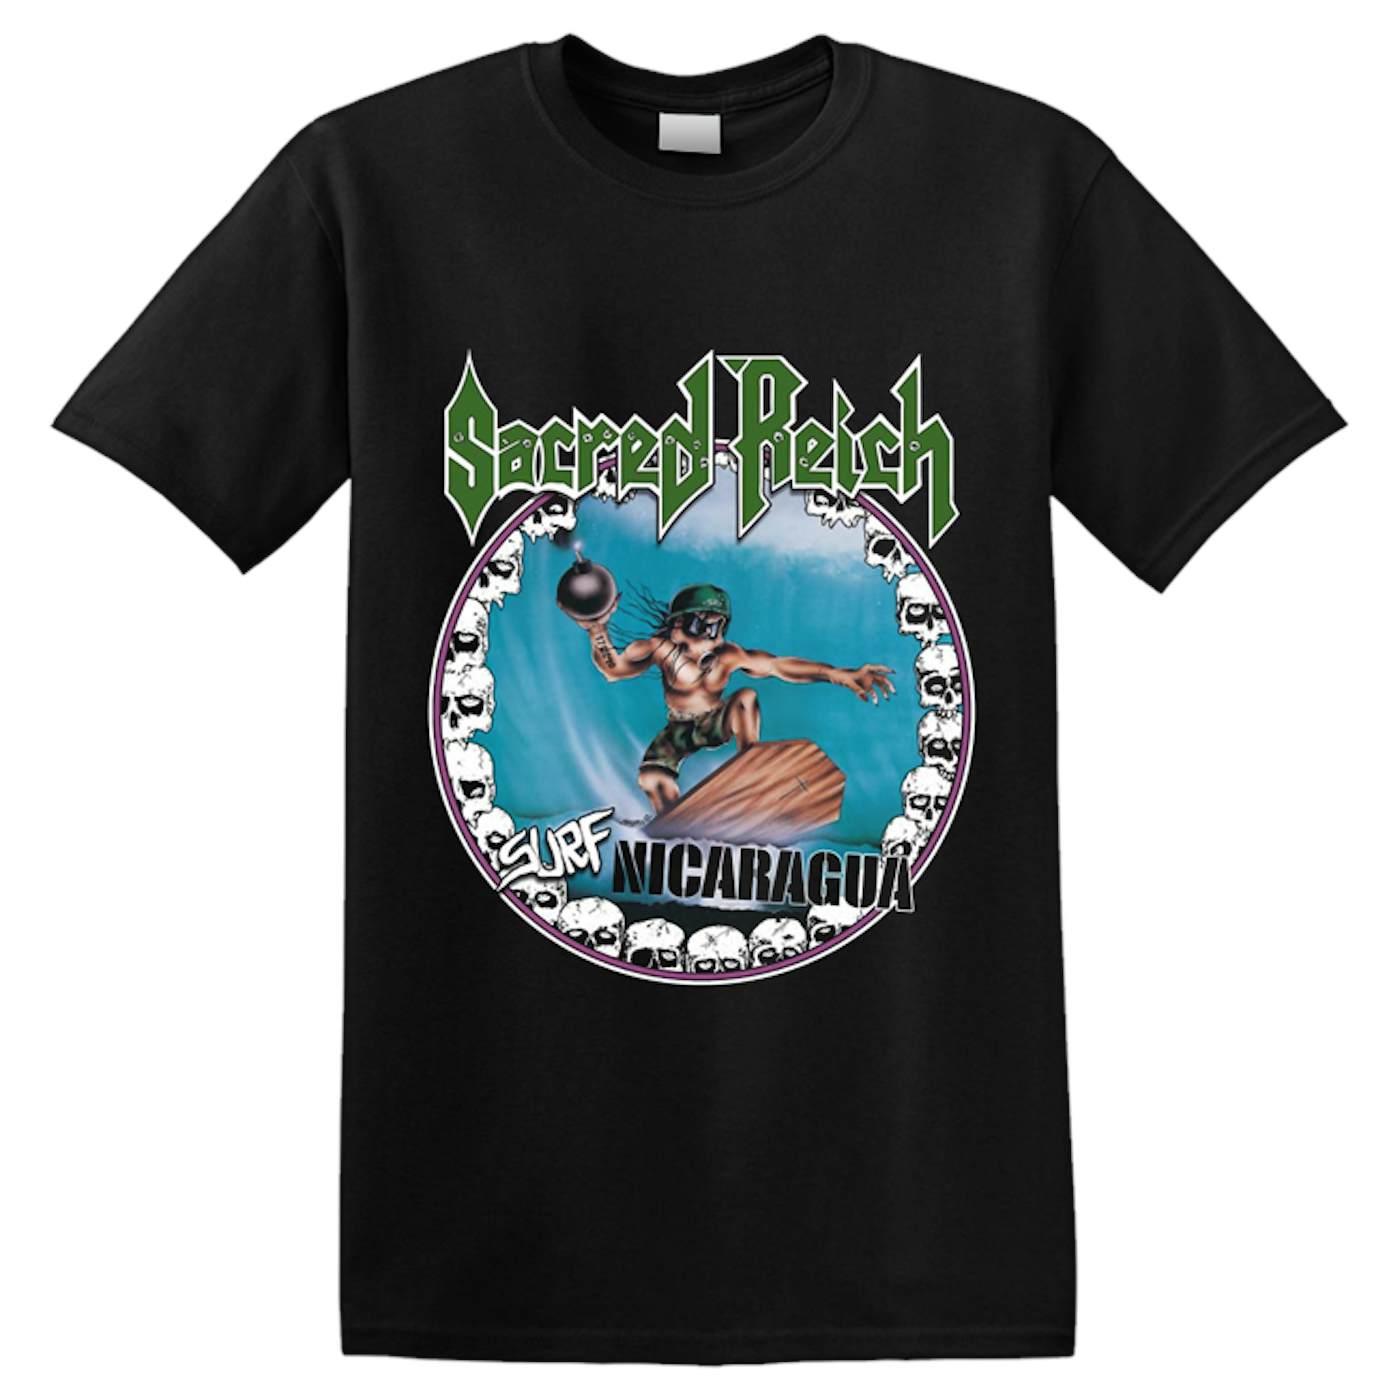 SACRED REICH - 'Surf Nicaragua' T-Shirt